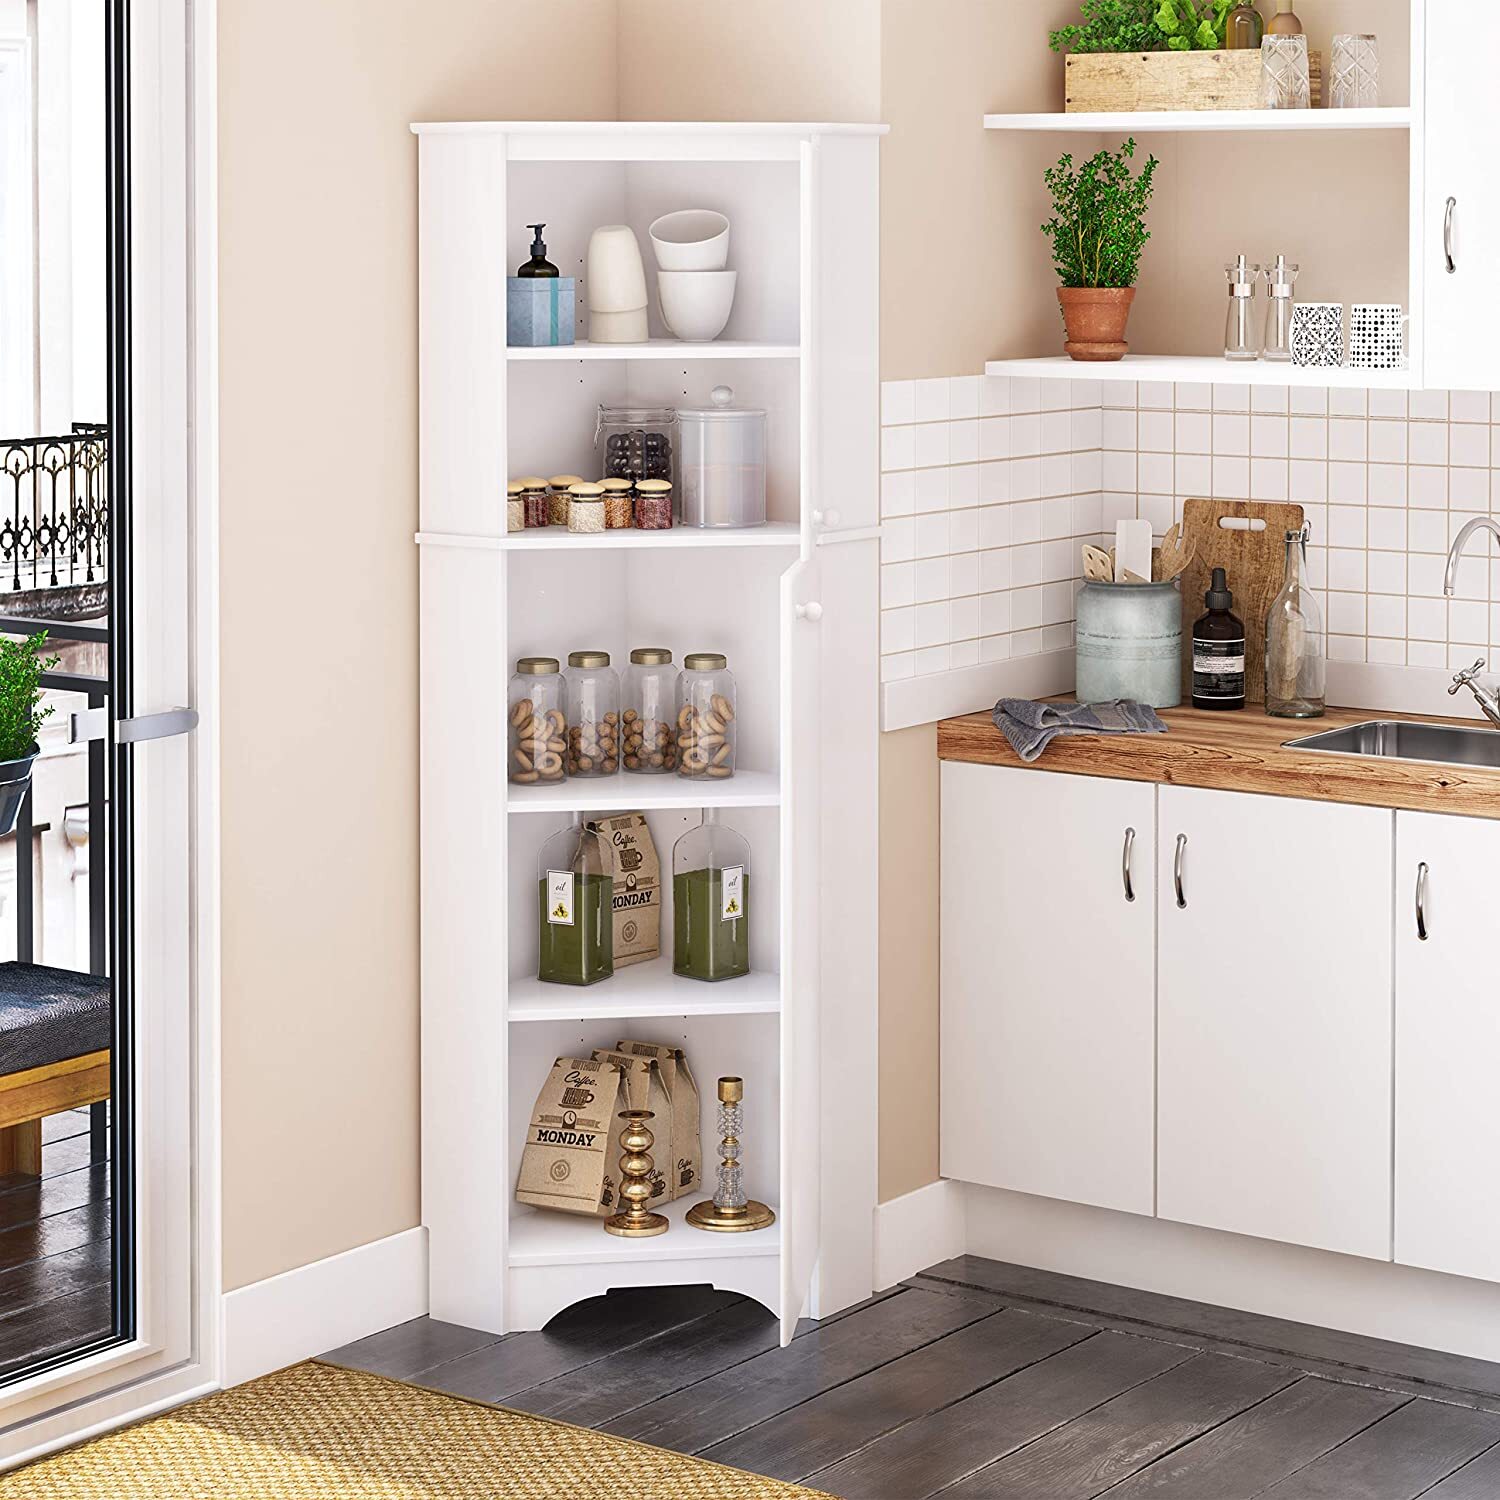 A corner stand alone kitchen cabinet